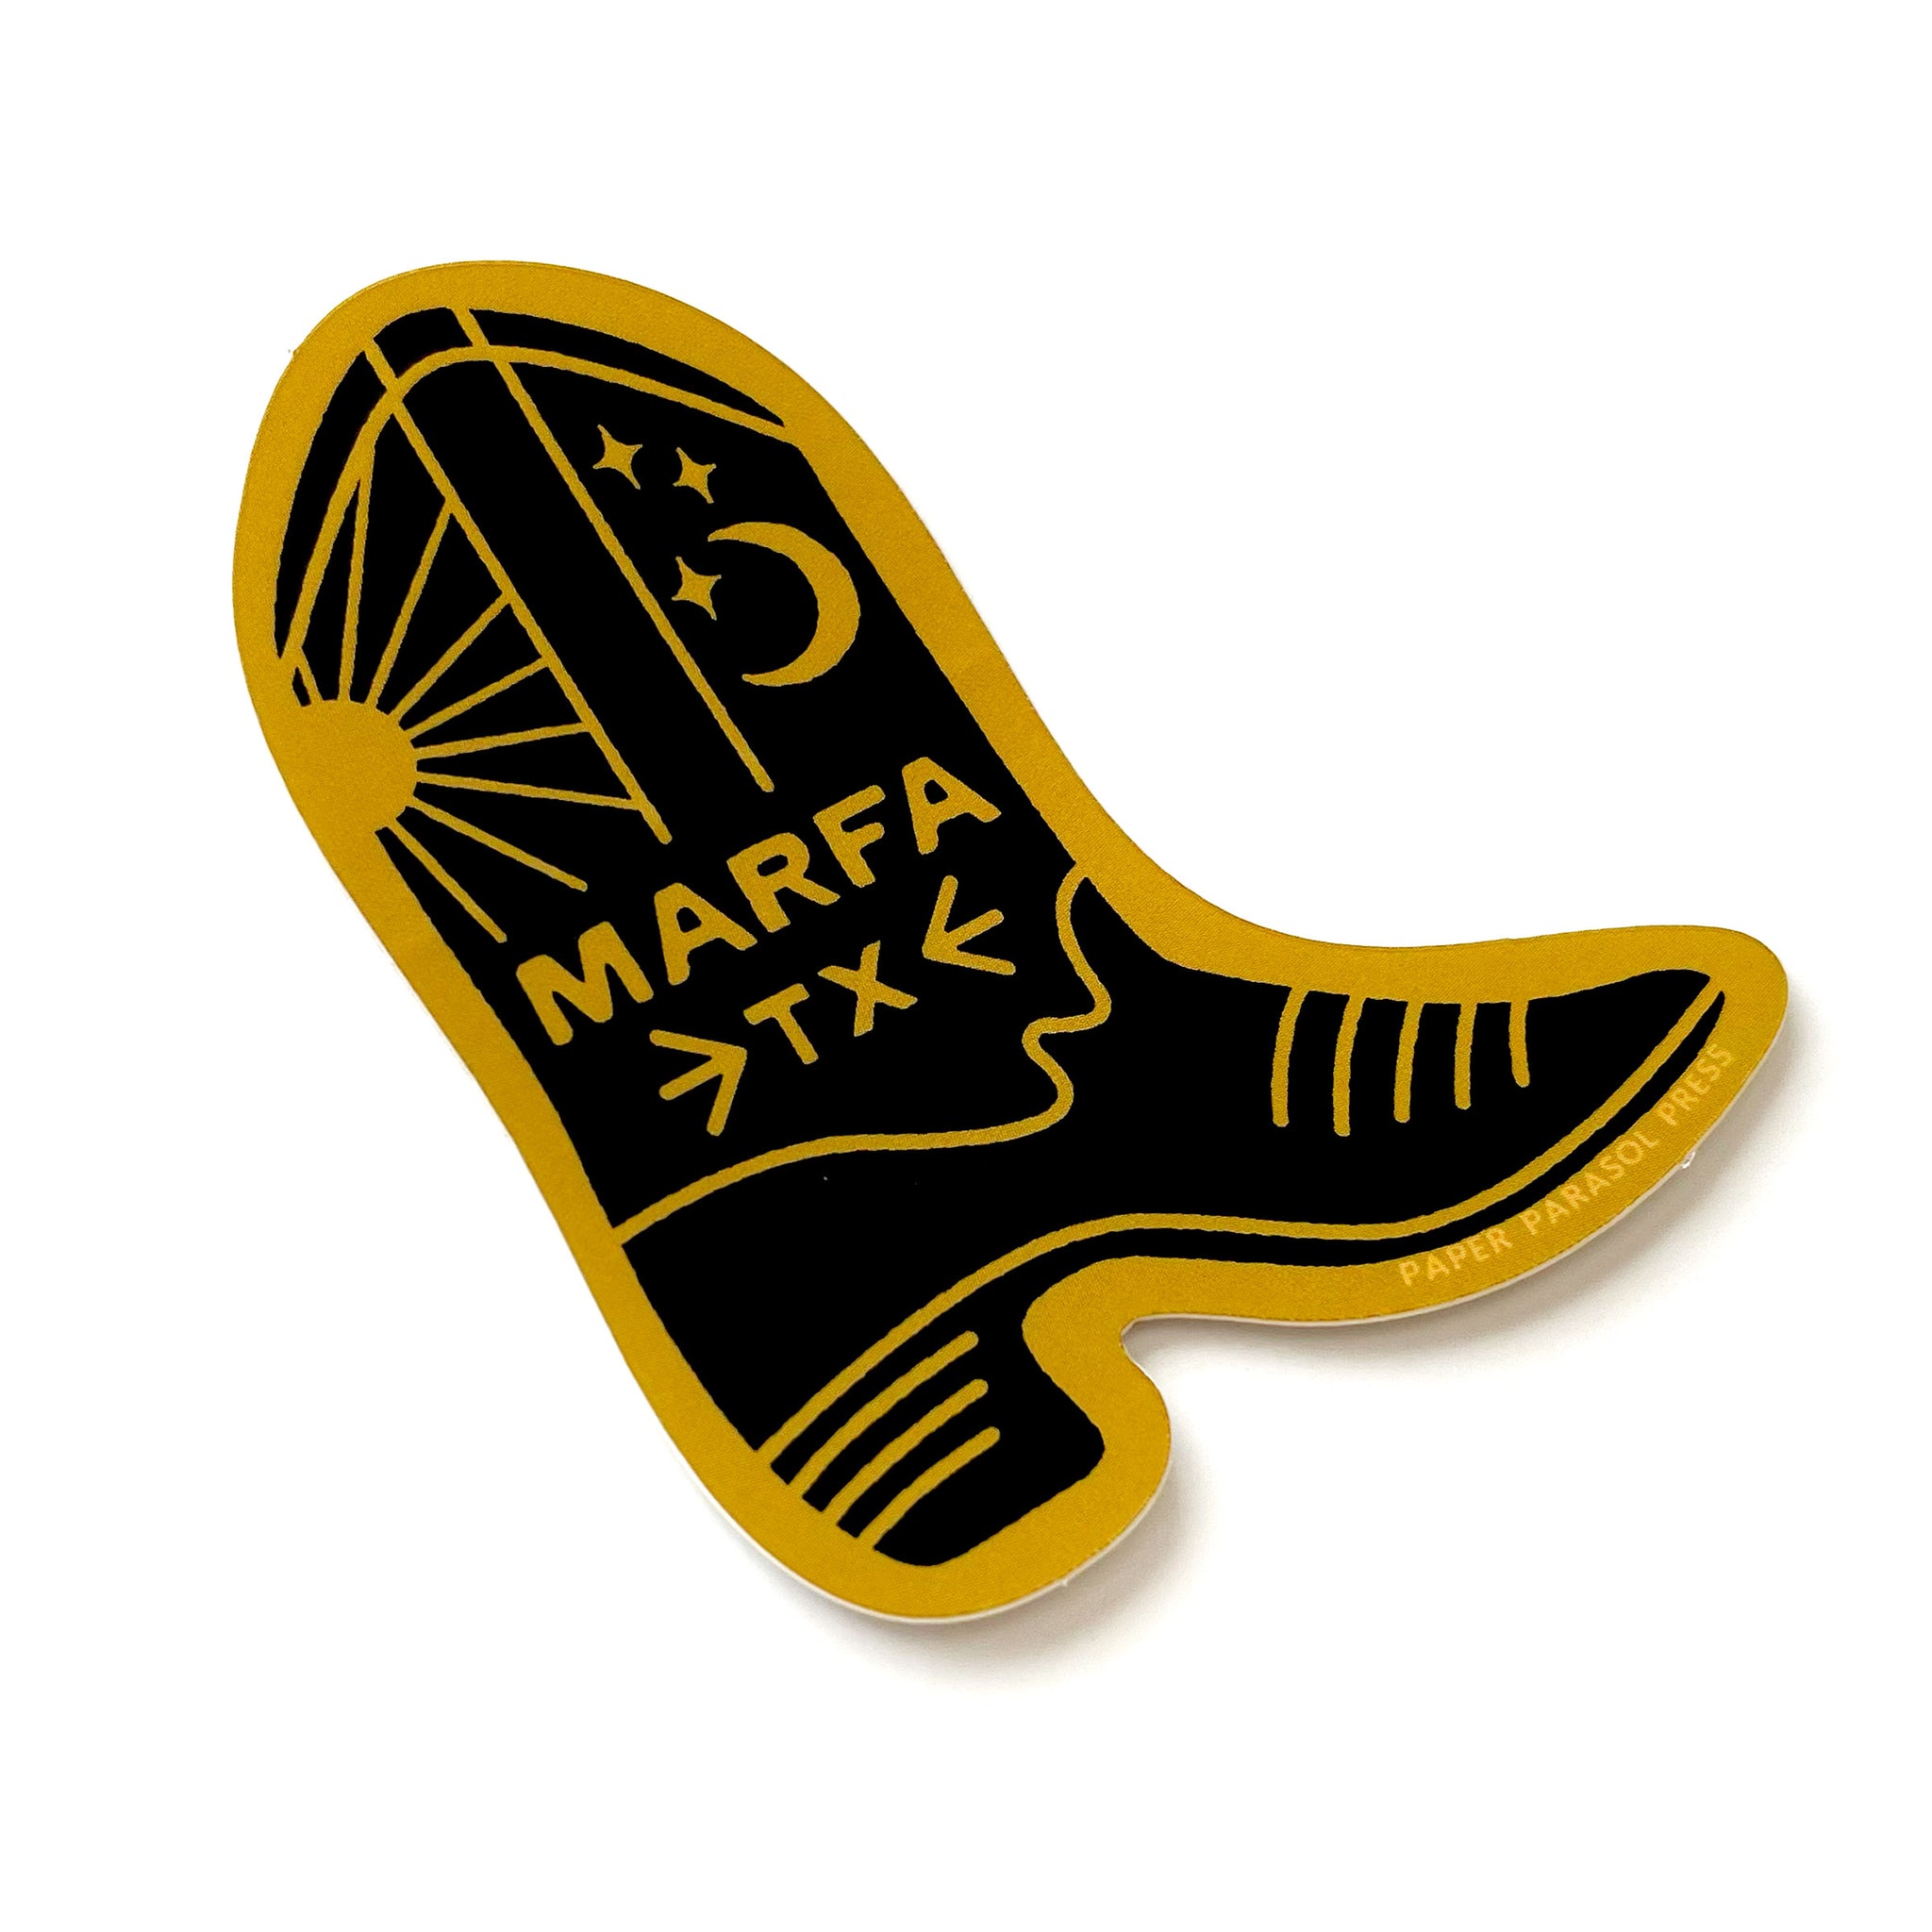 Marfa, Texas Boot Sticker